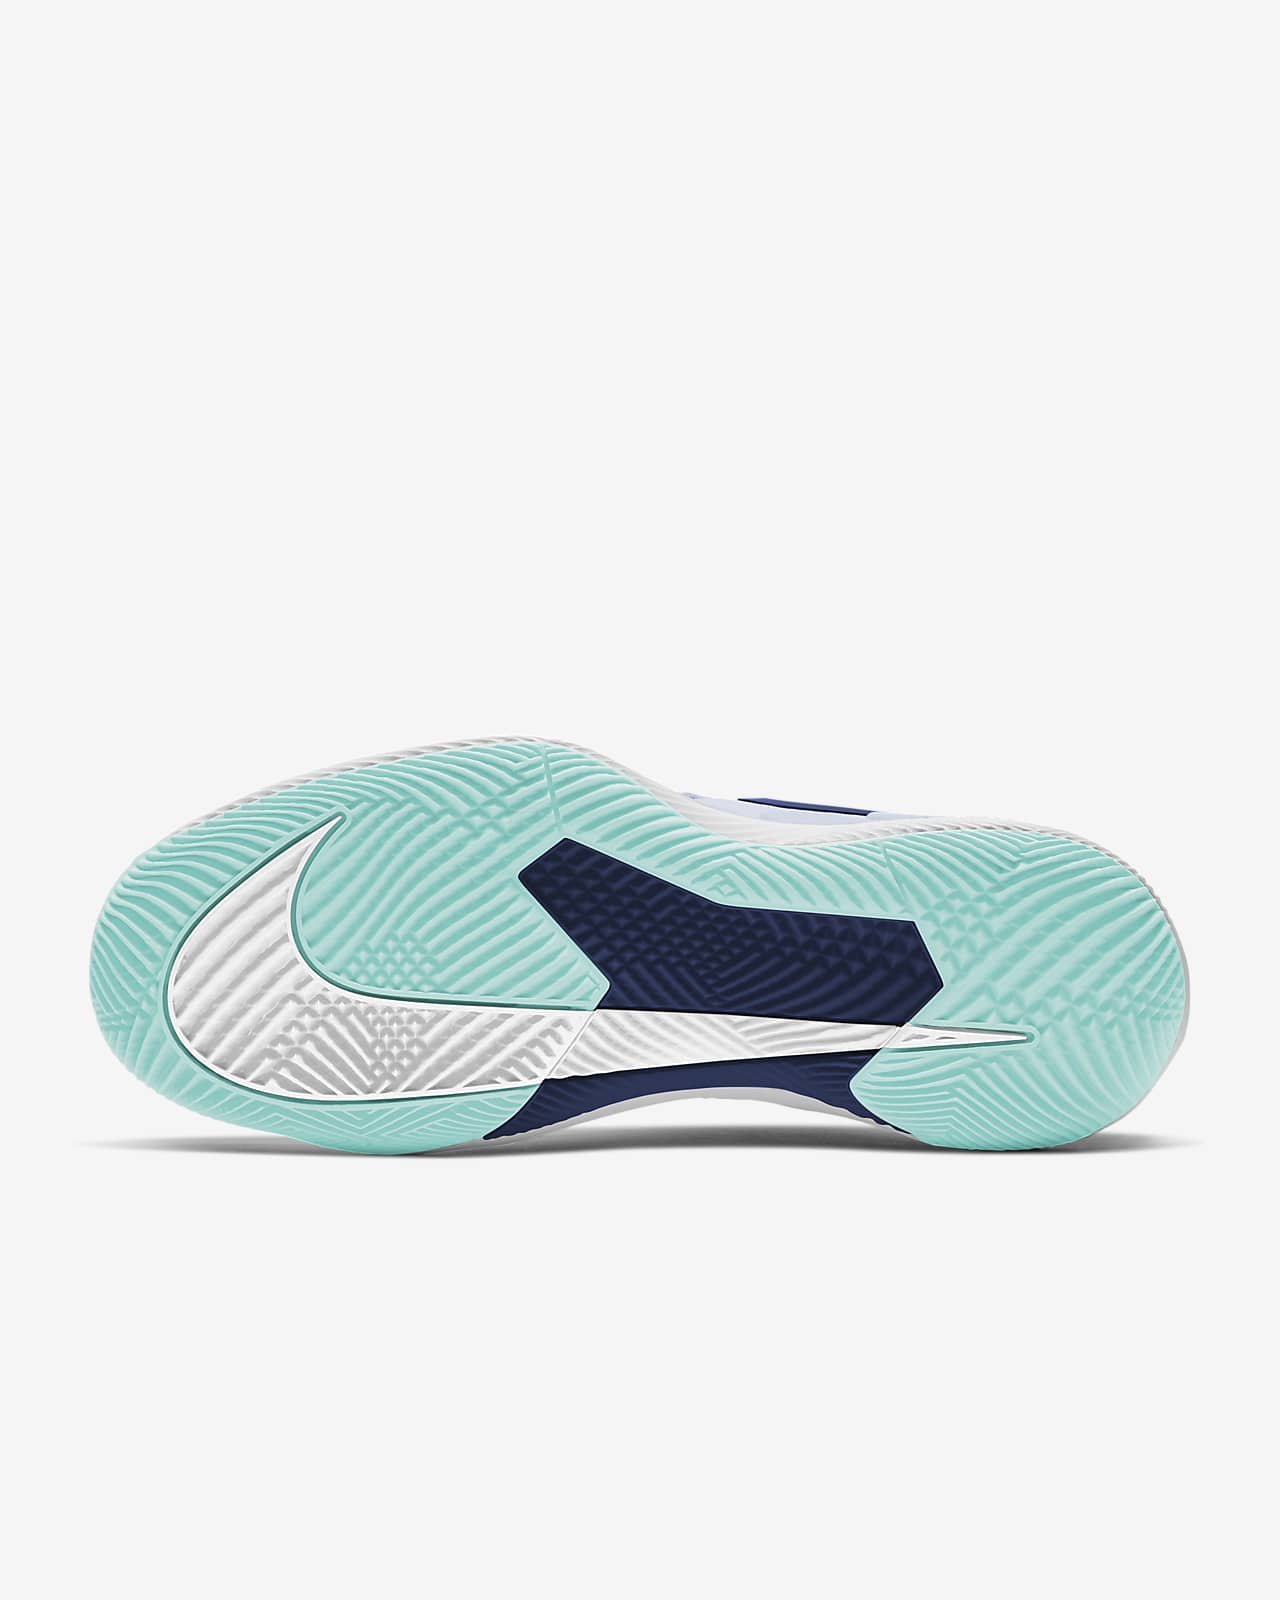 NikeCourt Air Zoom Vapor X Women's Hard Court Tennis Shoes